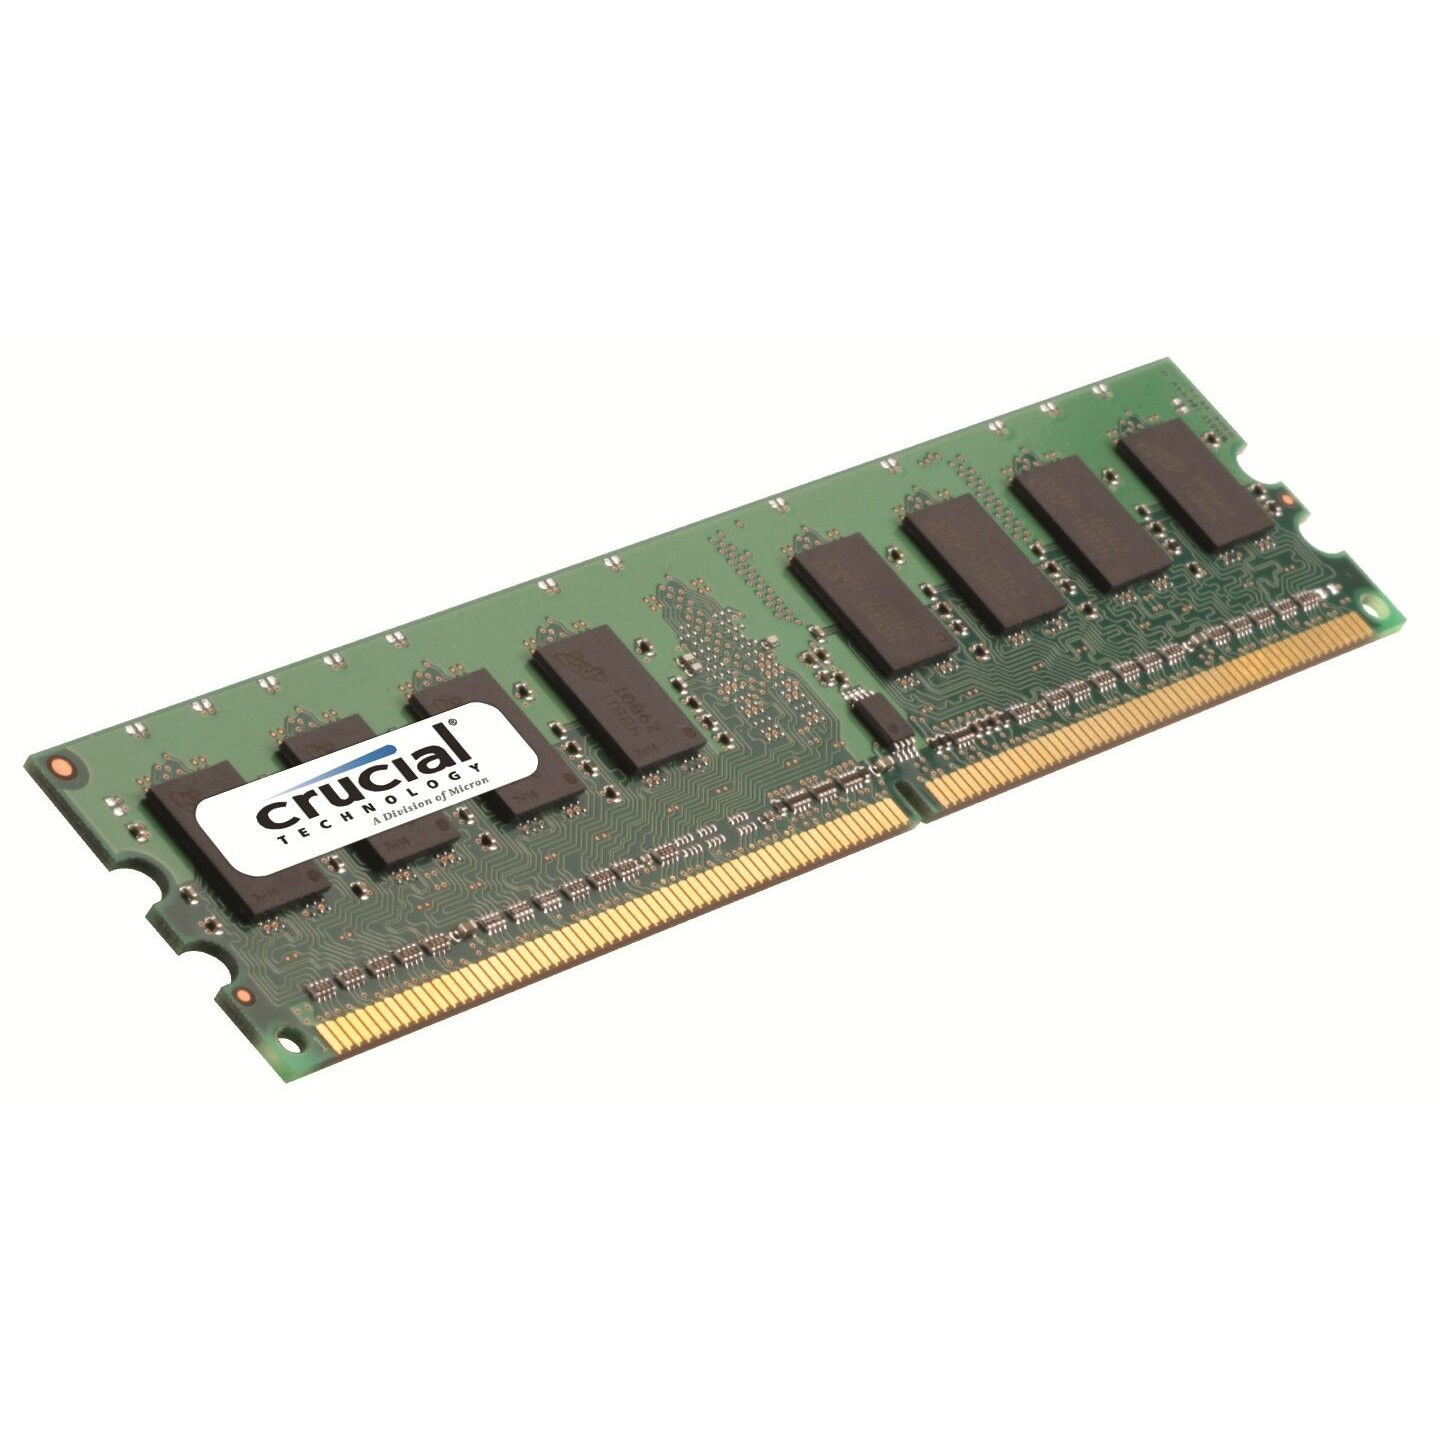 Crucial 2GB DDR2 667MHz PC2-5300 240pin CL5 Unbuffered ECC Desktop Server Memory